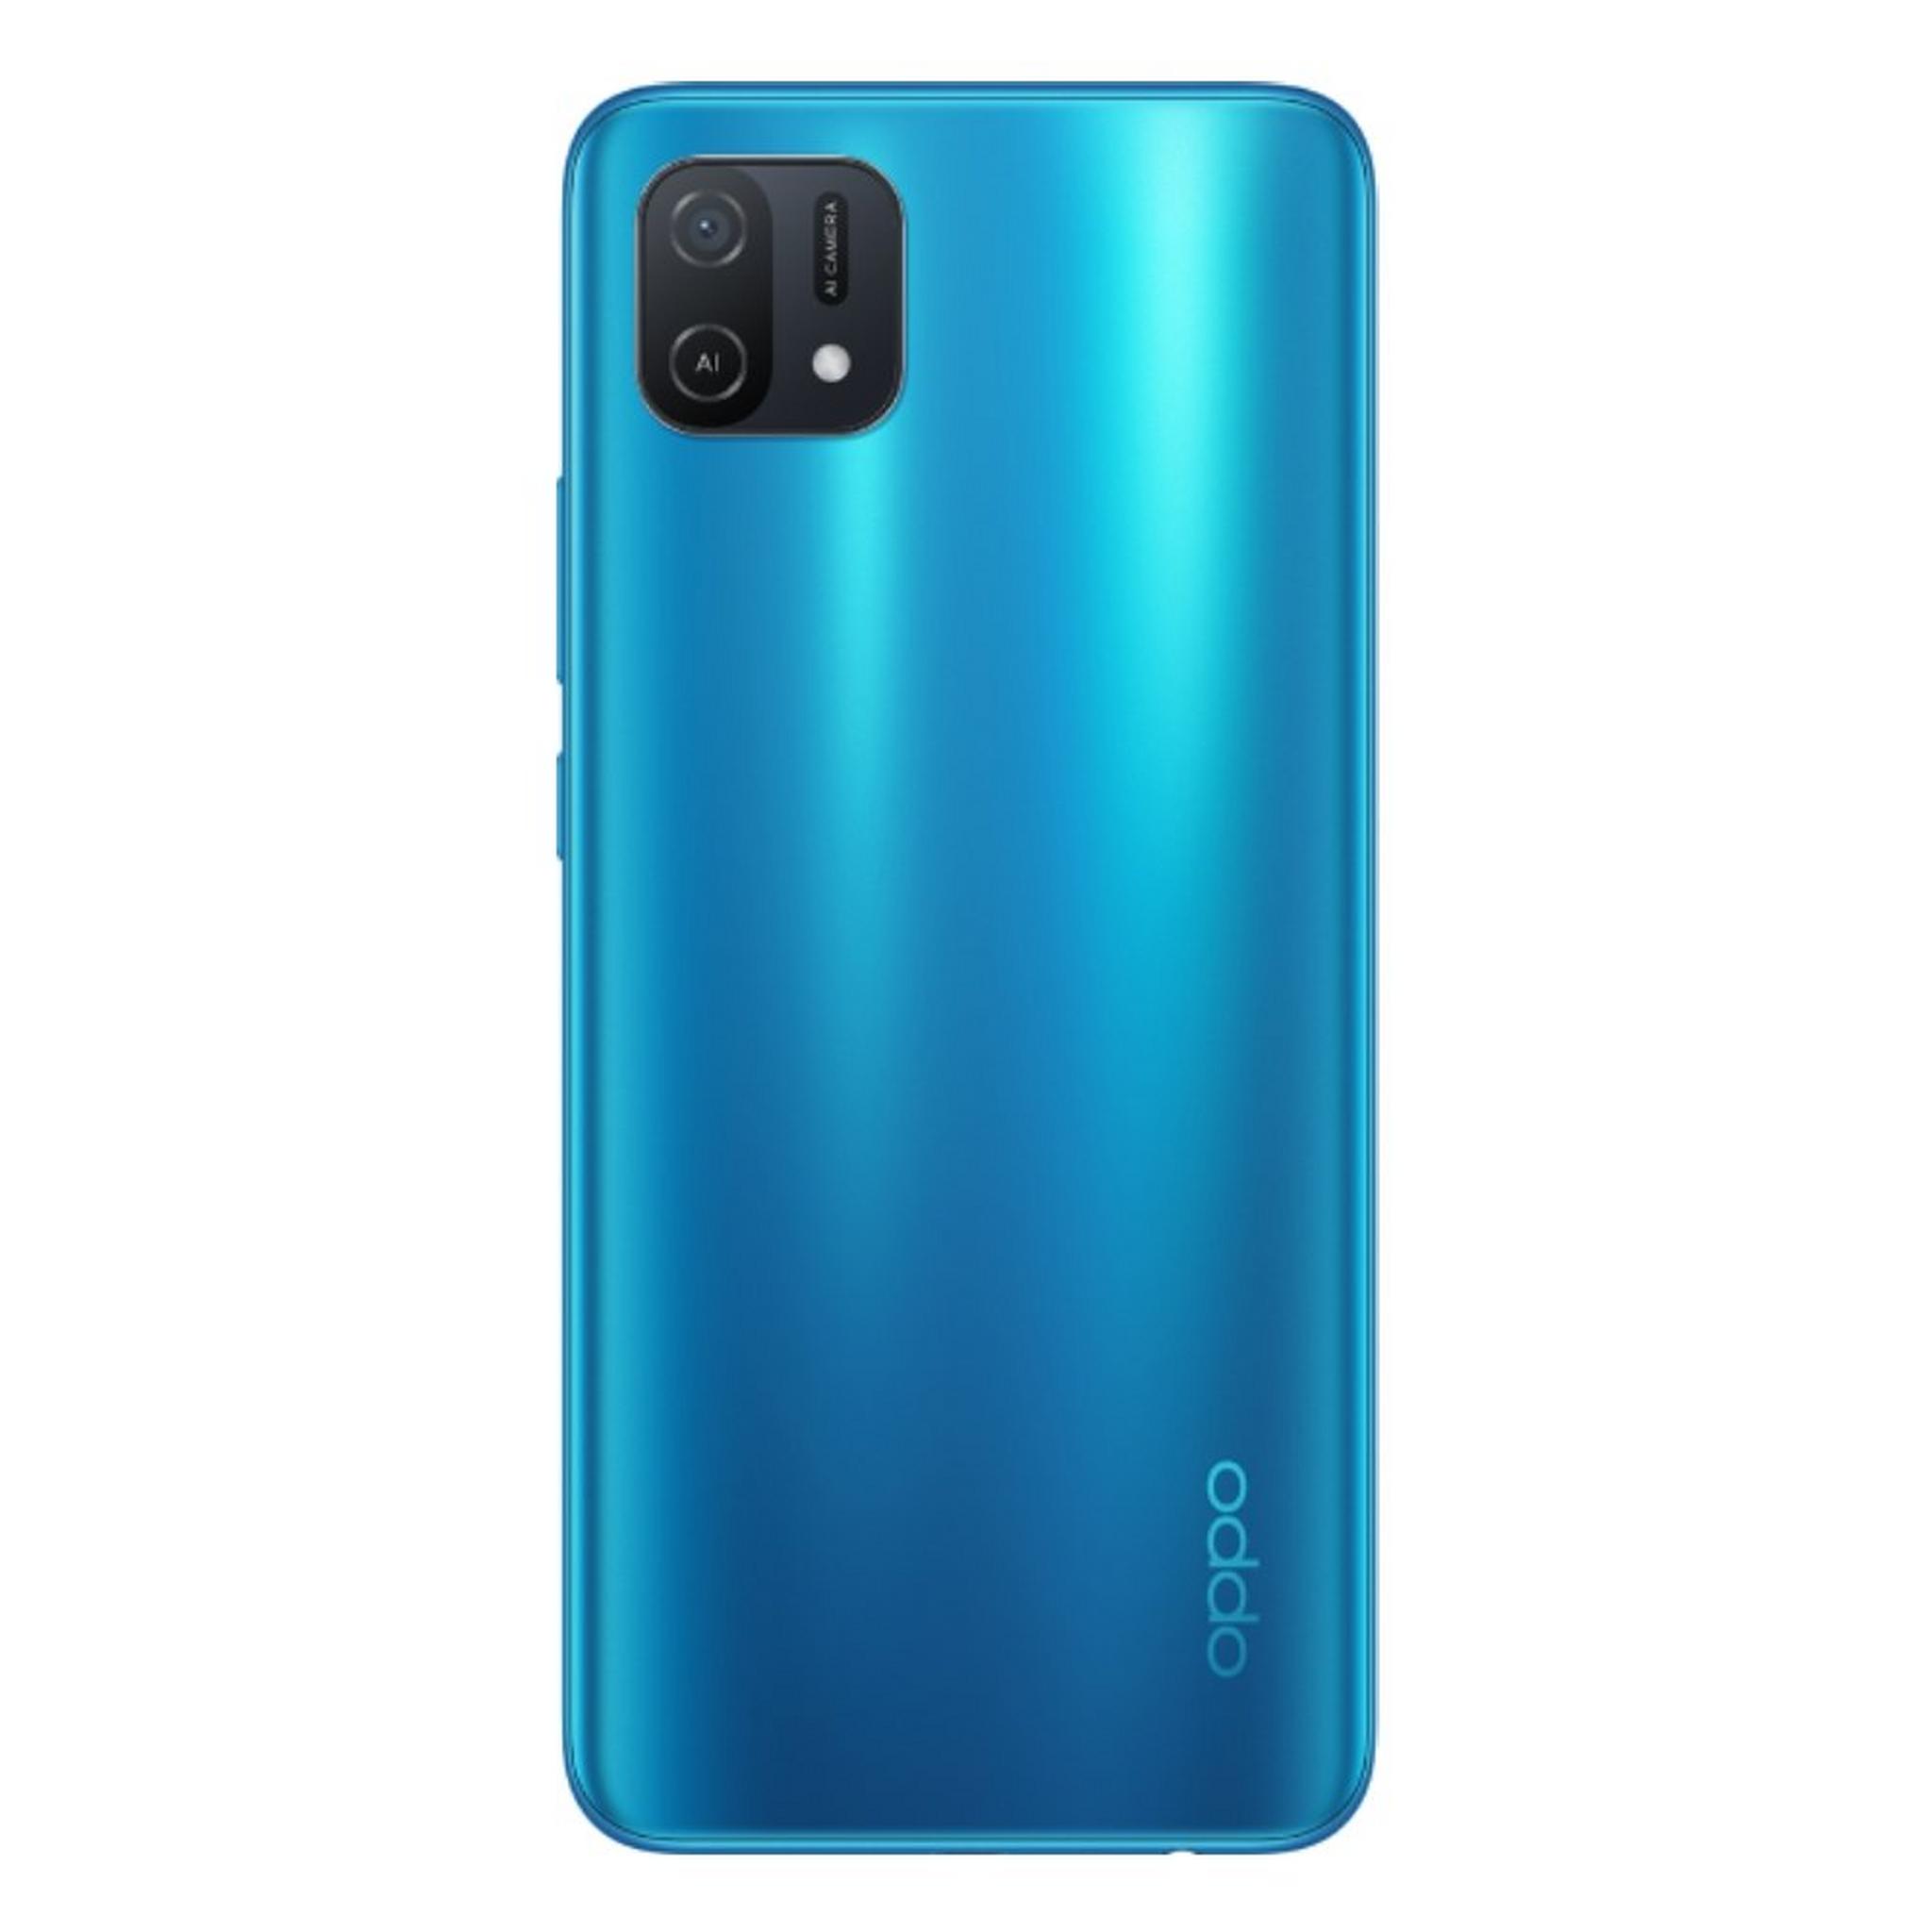 Oppo A16K 32GB Phone - Rainbow Blue